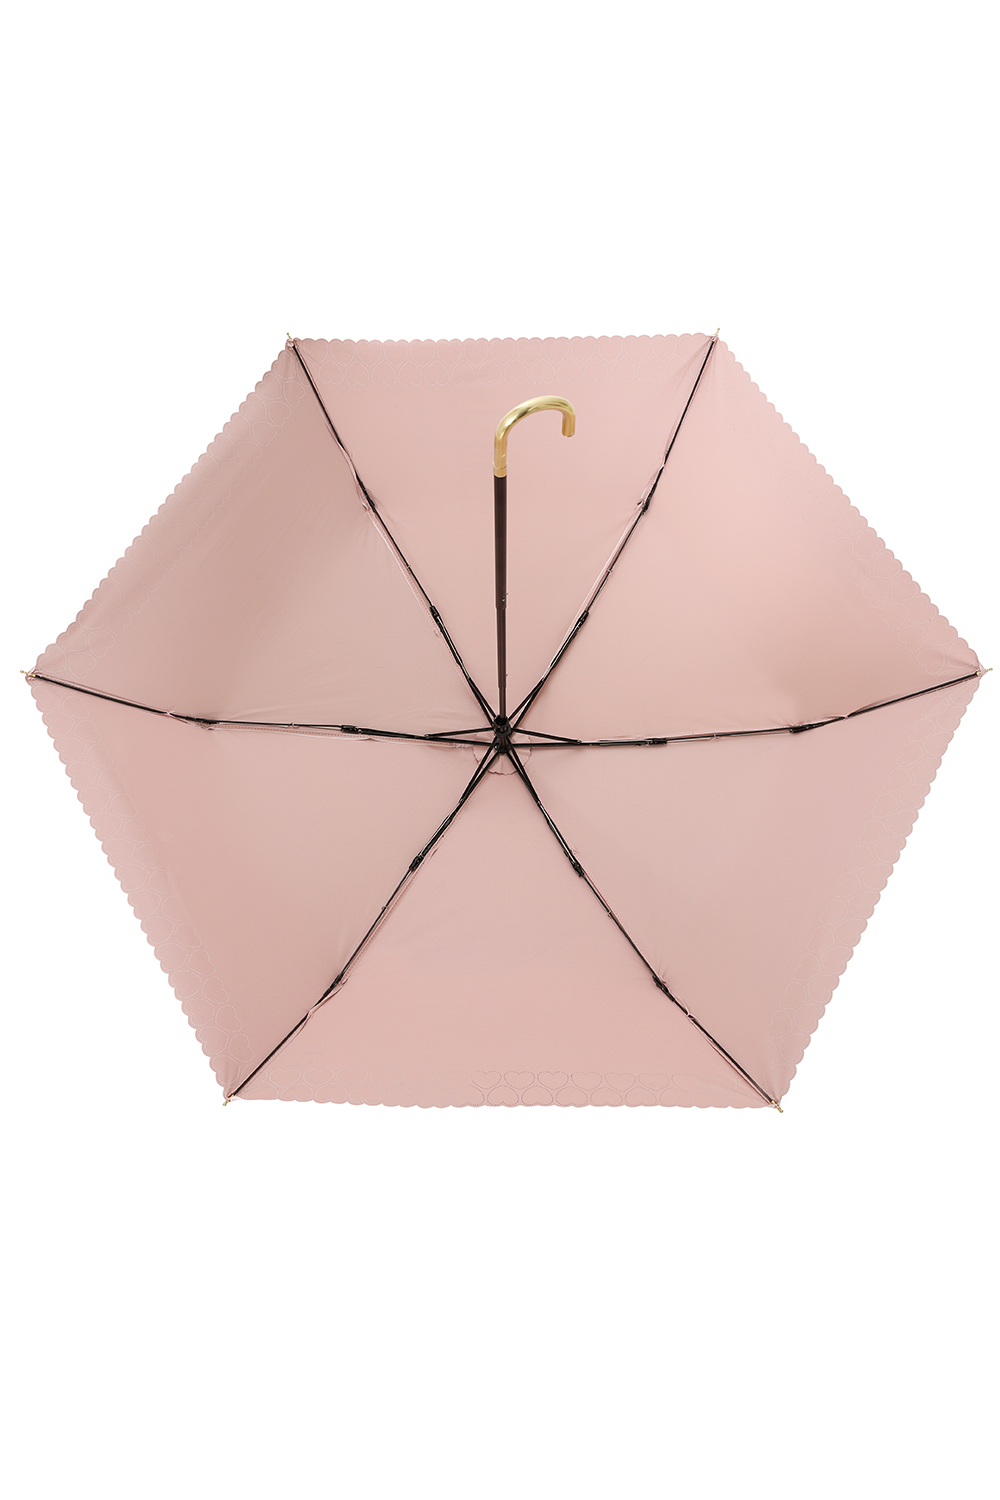 Exclusive H&R London Umbrella